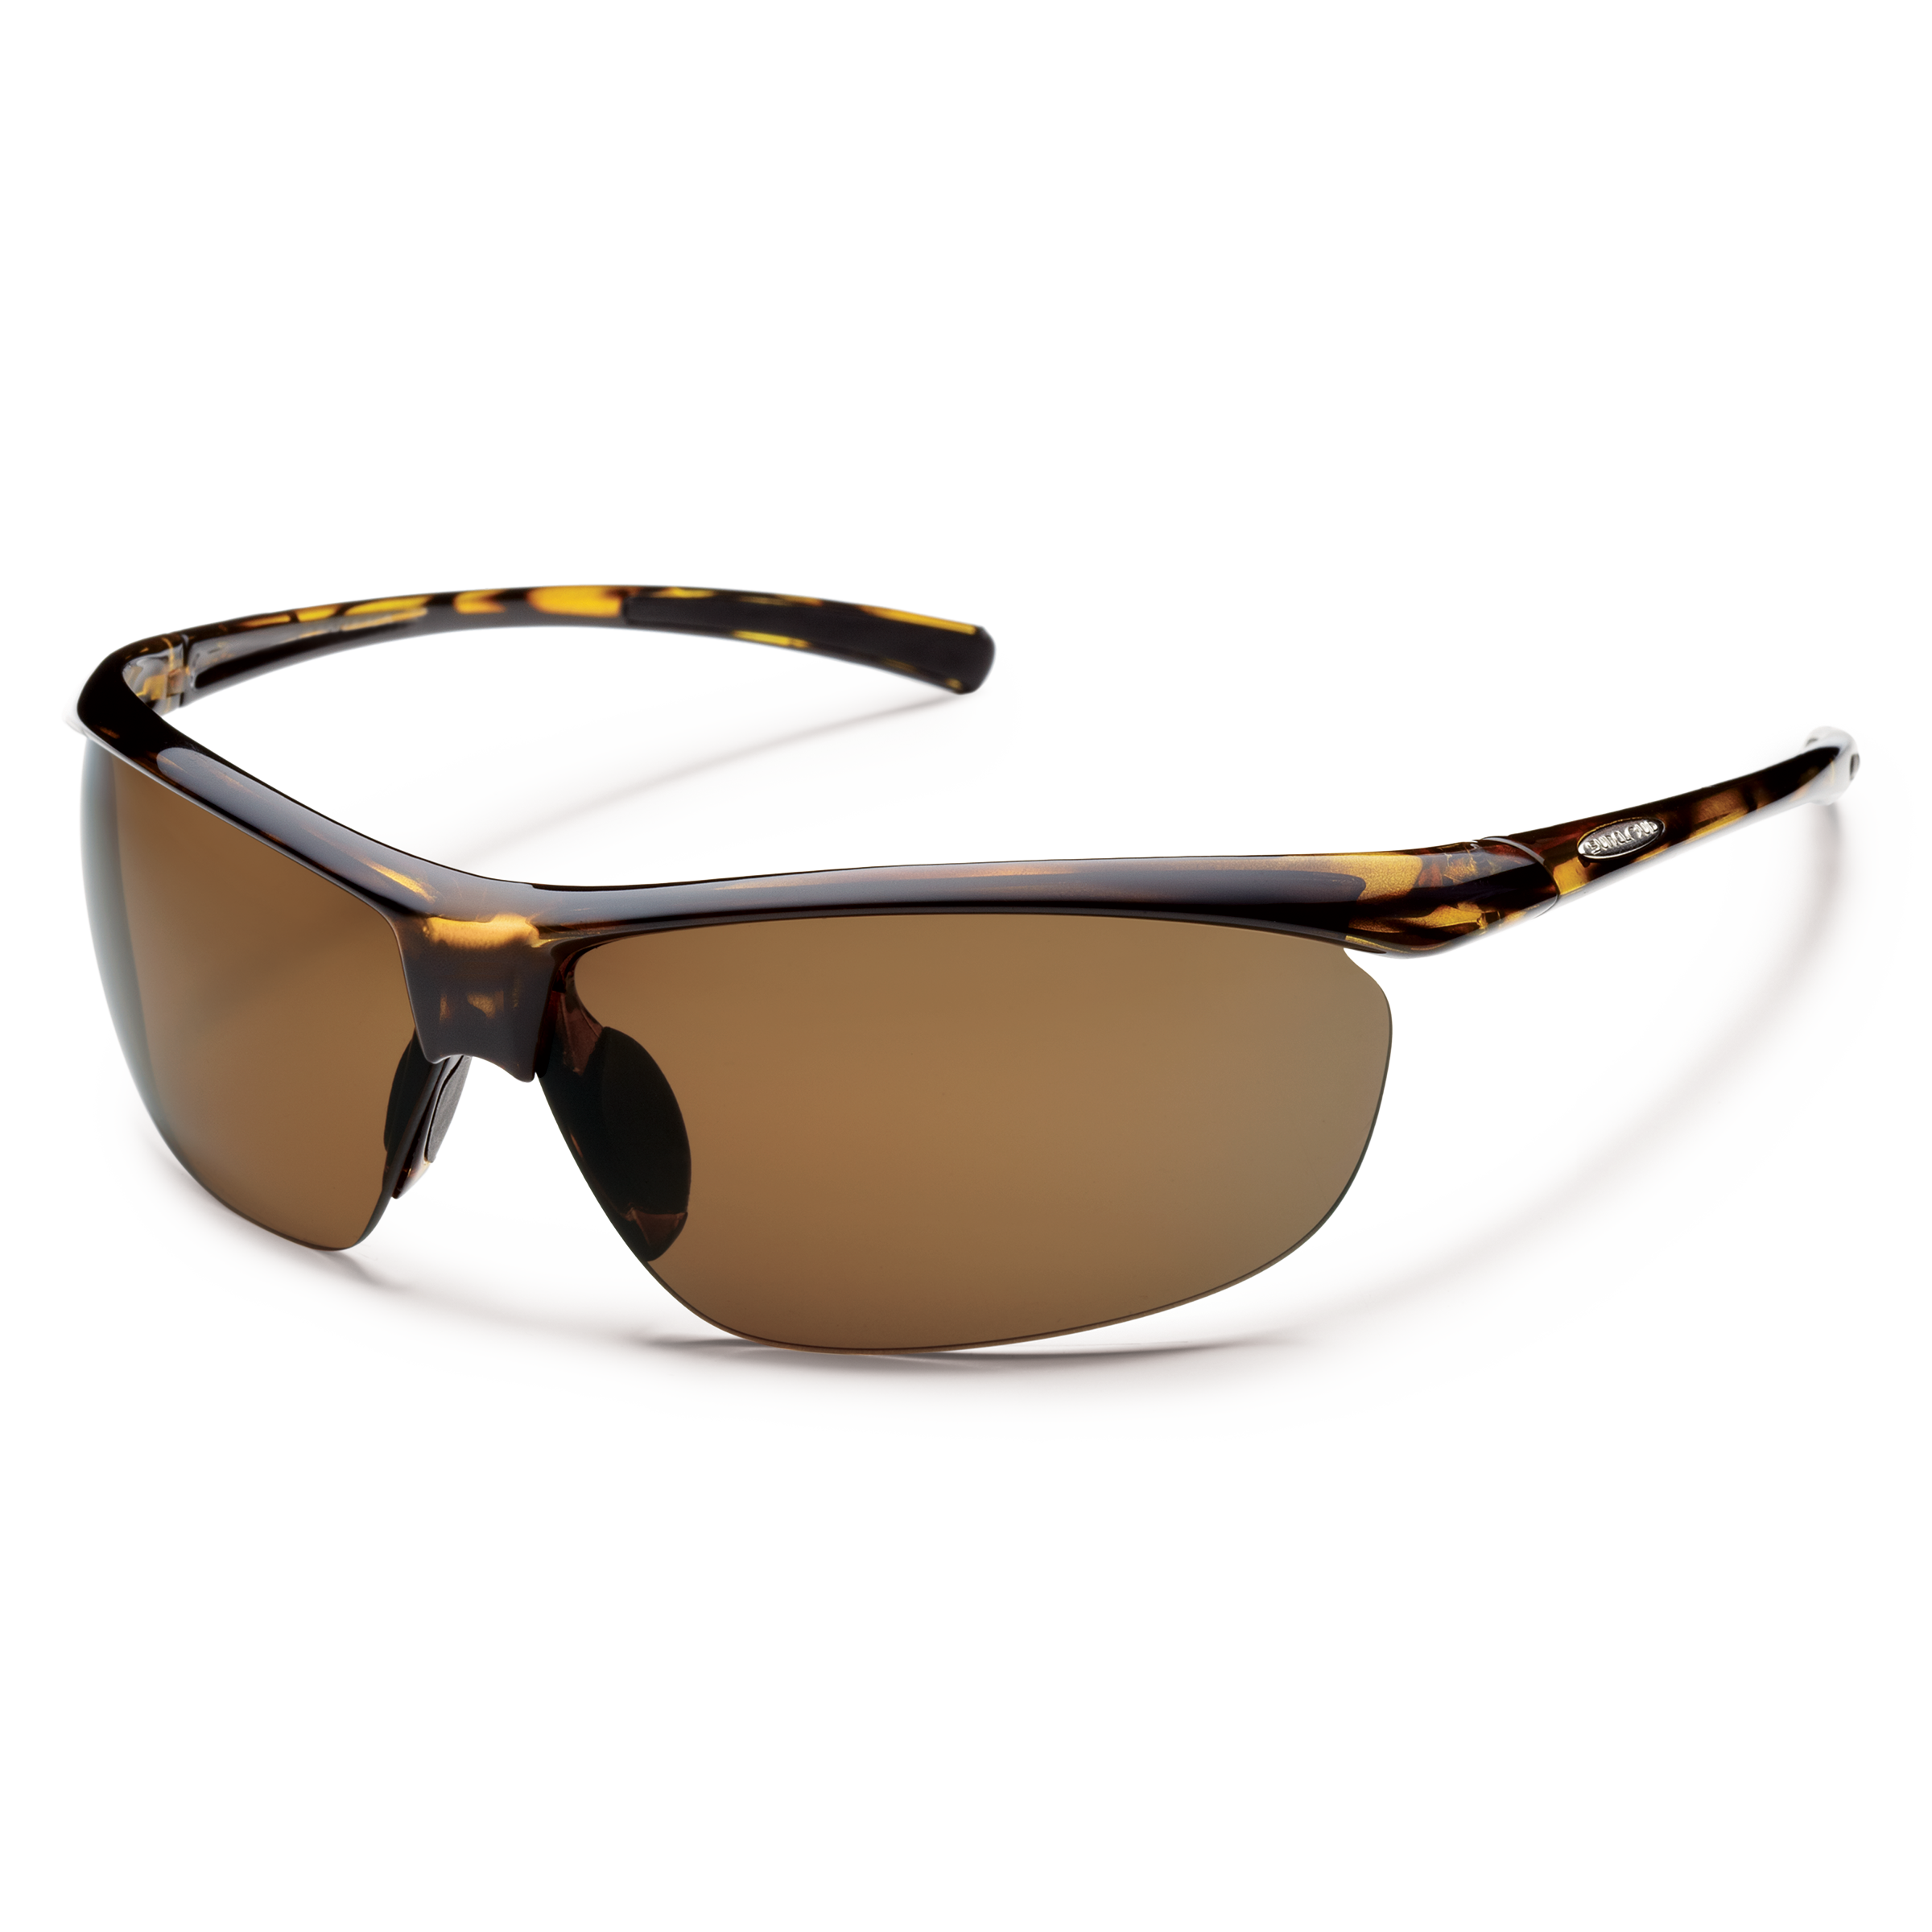 Suncloud Turbine Polarized Sunglasses Blackened Tortoise & Brown Lens AUTHENTIC 